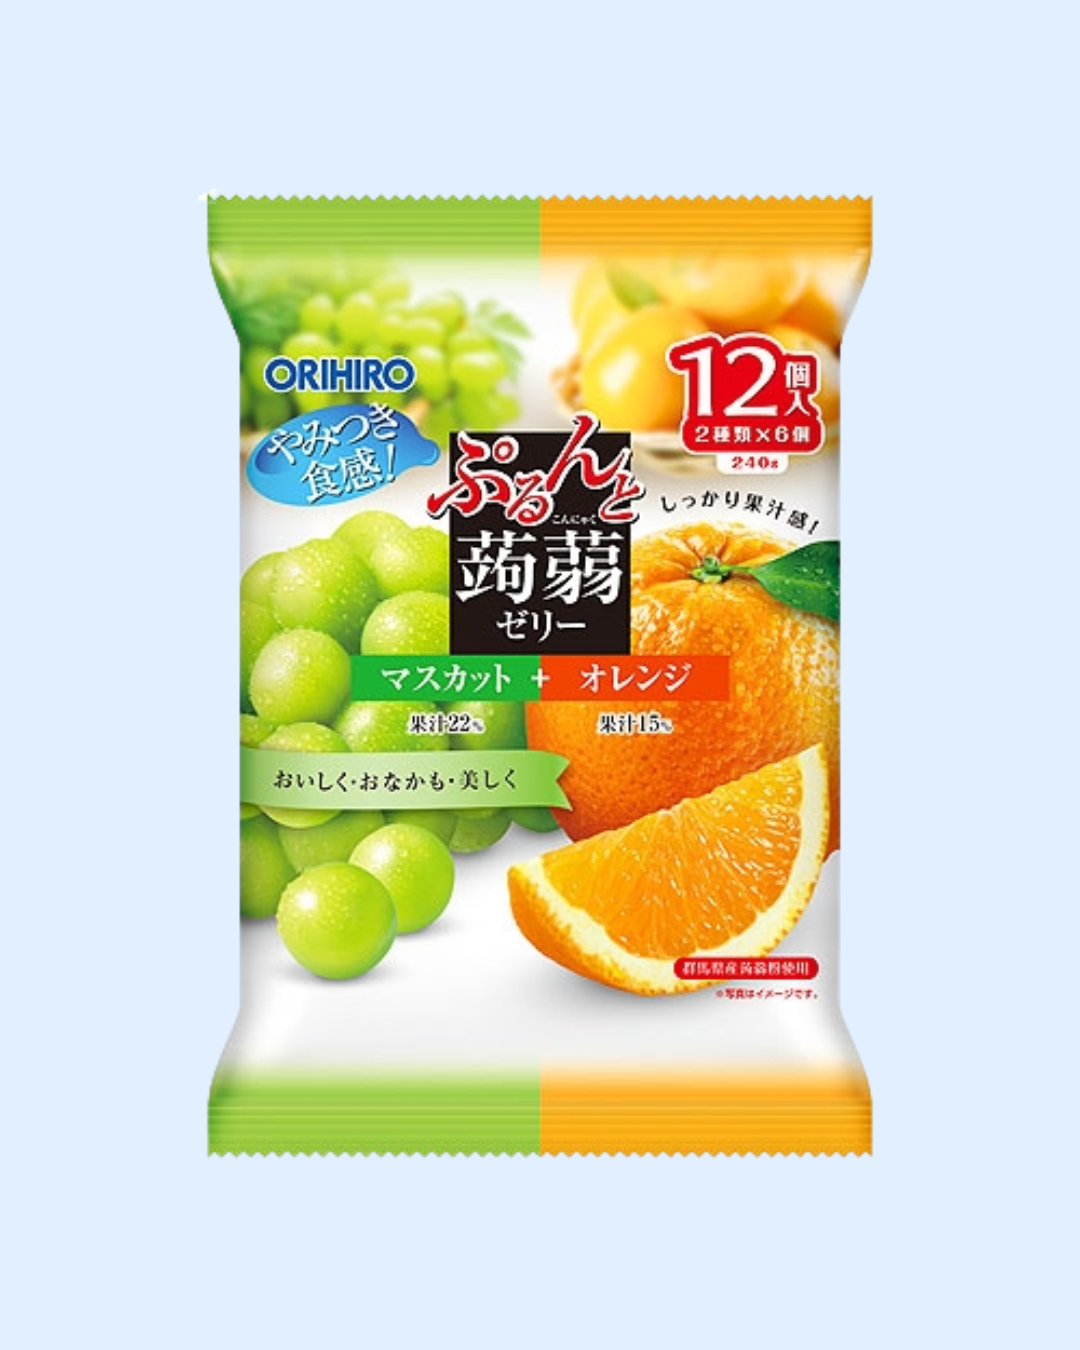 Orihiro Muscat & Orange Jelly